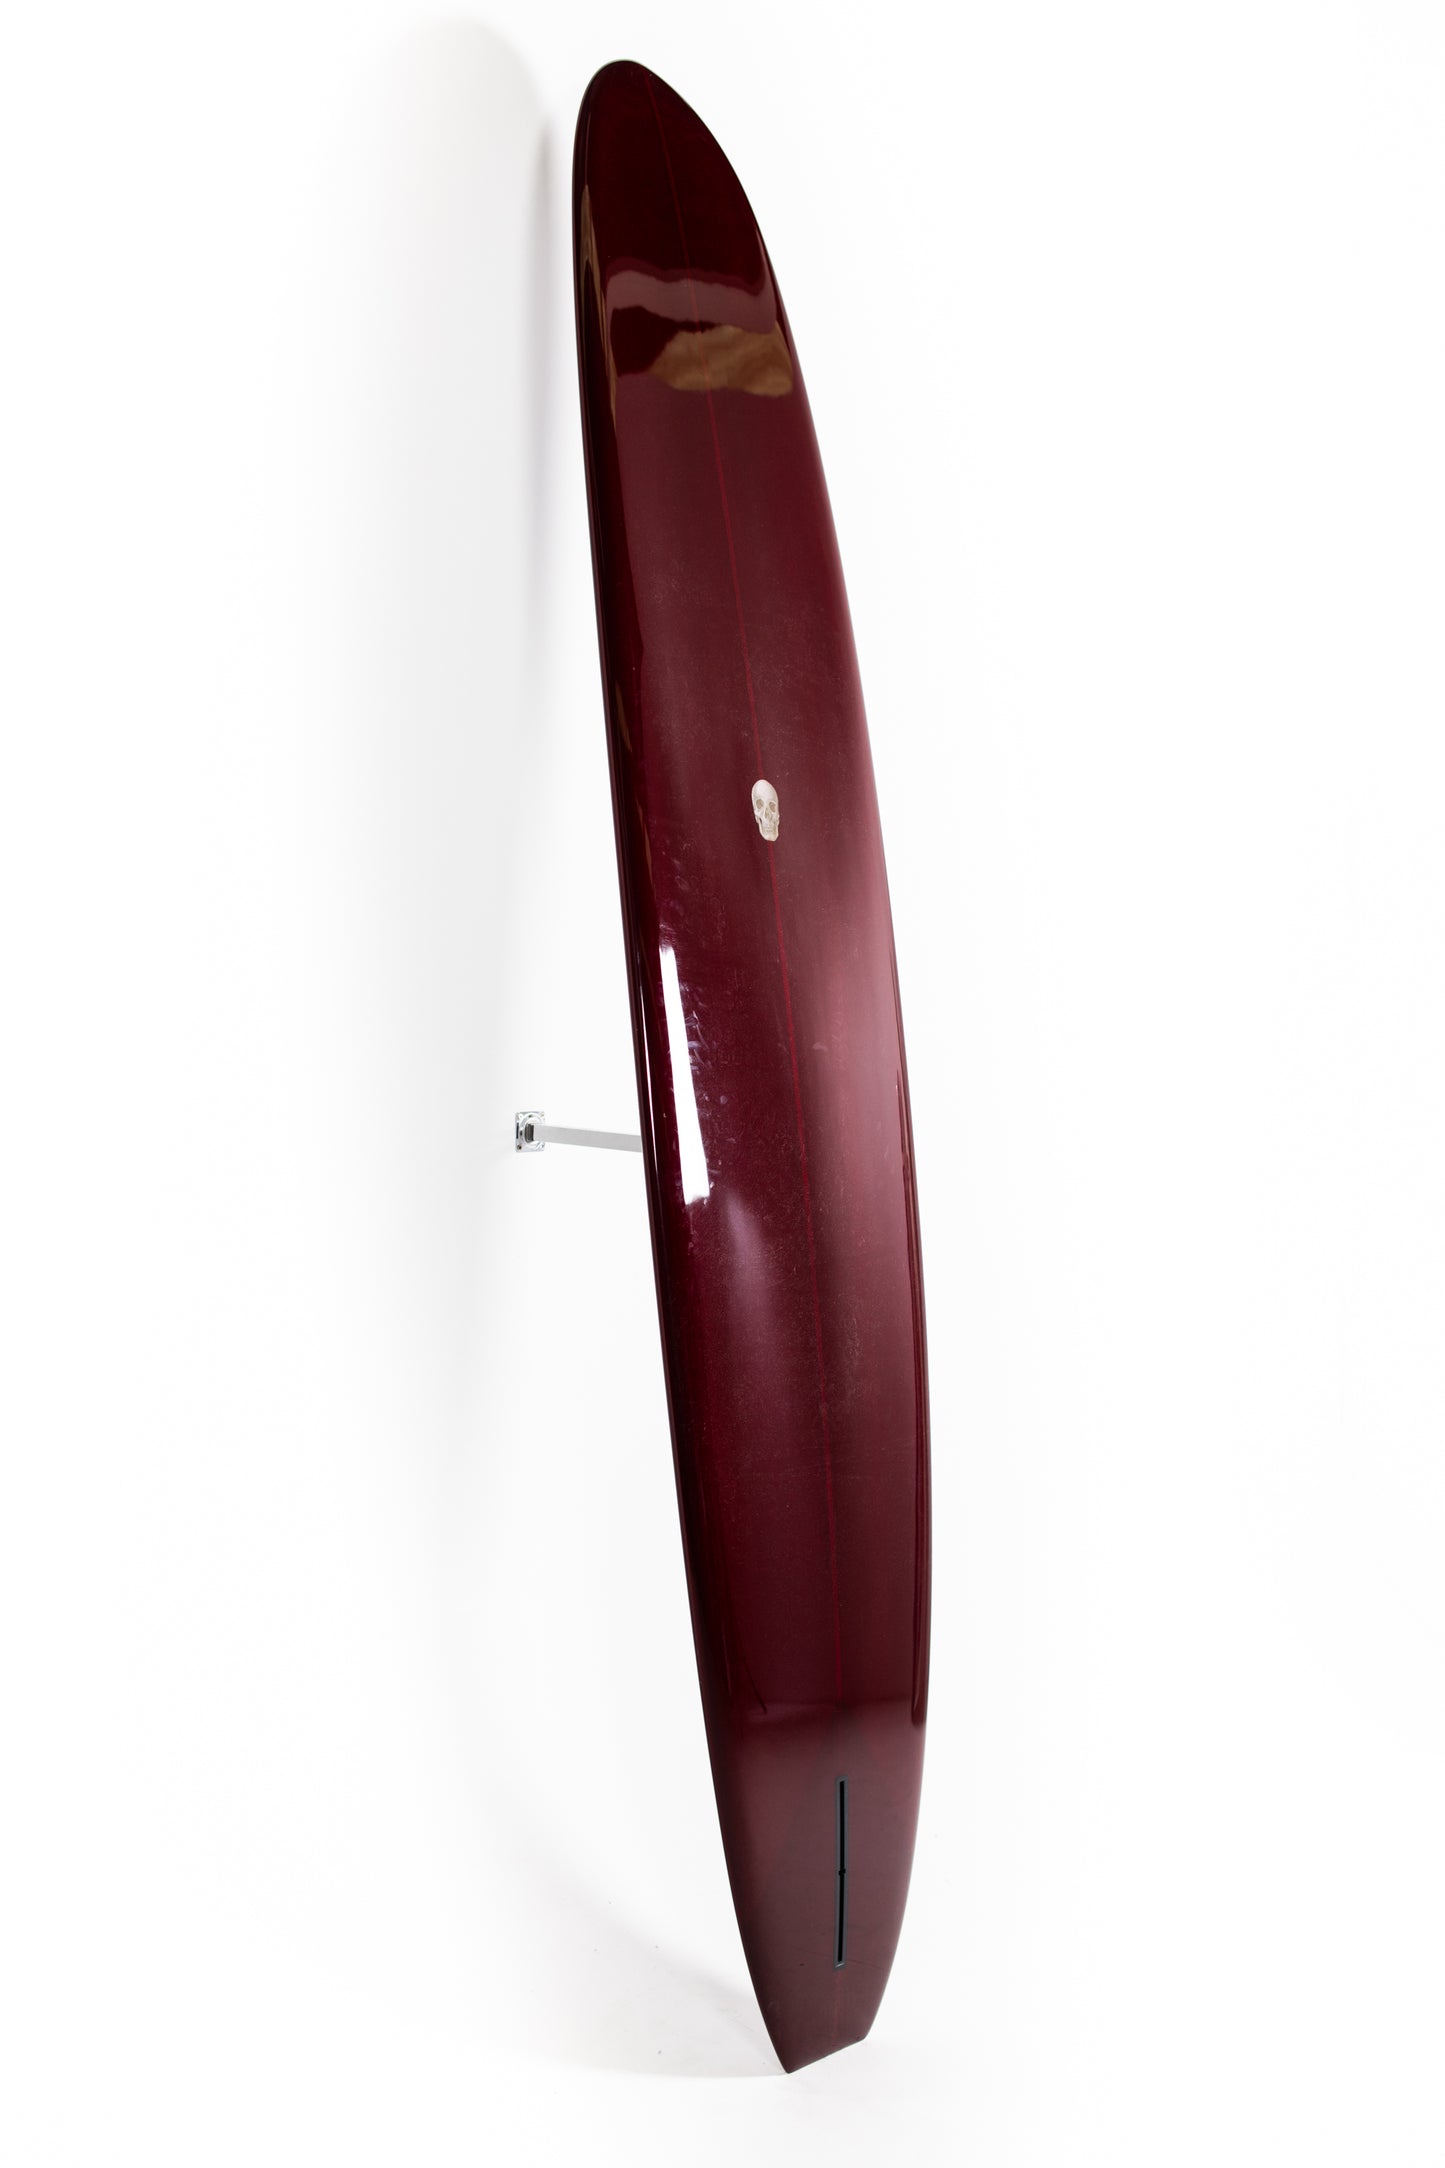 
                  
                    Pukas Surf Shop - Christenson Surfboard  - SCARLET BEGONIA by Chris Christenson - 9'3” x 23" x 2 13/16" - CX05366
                  
                